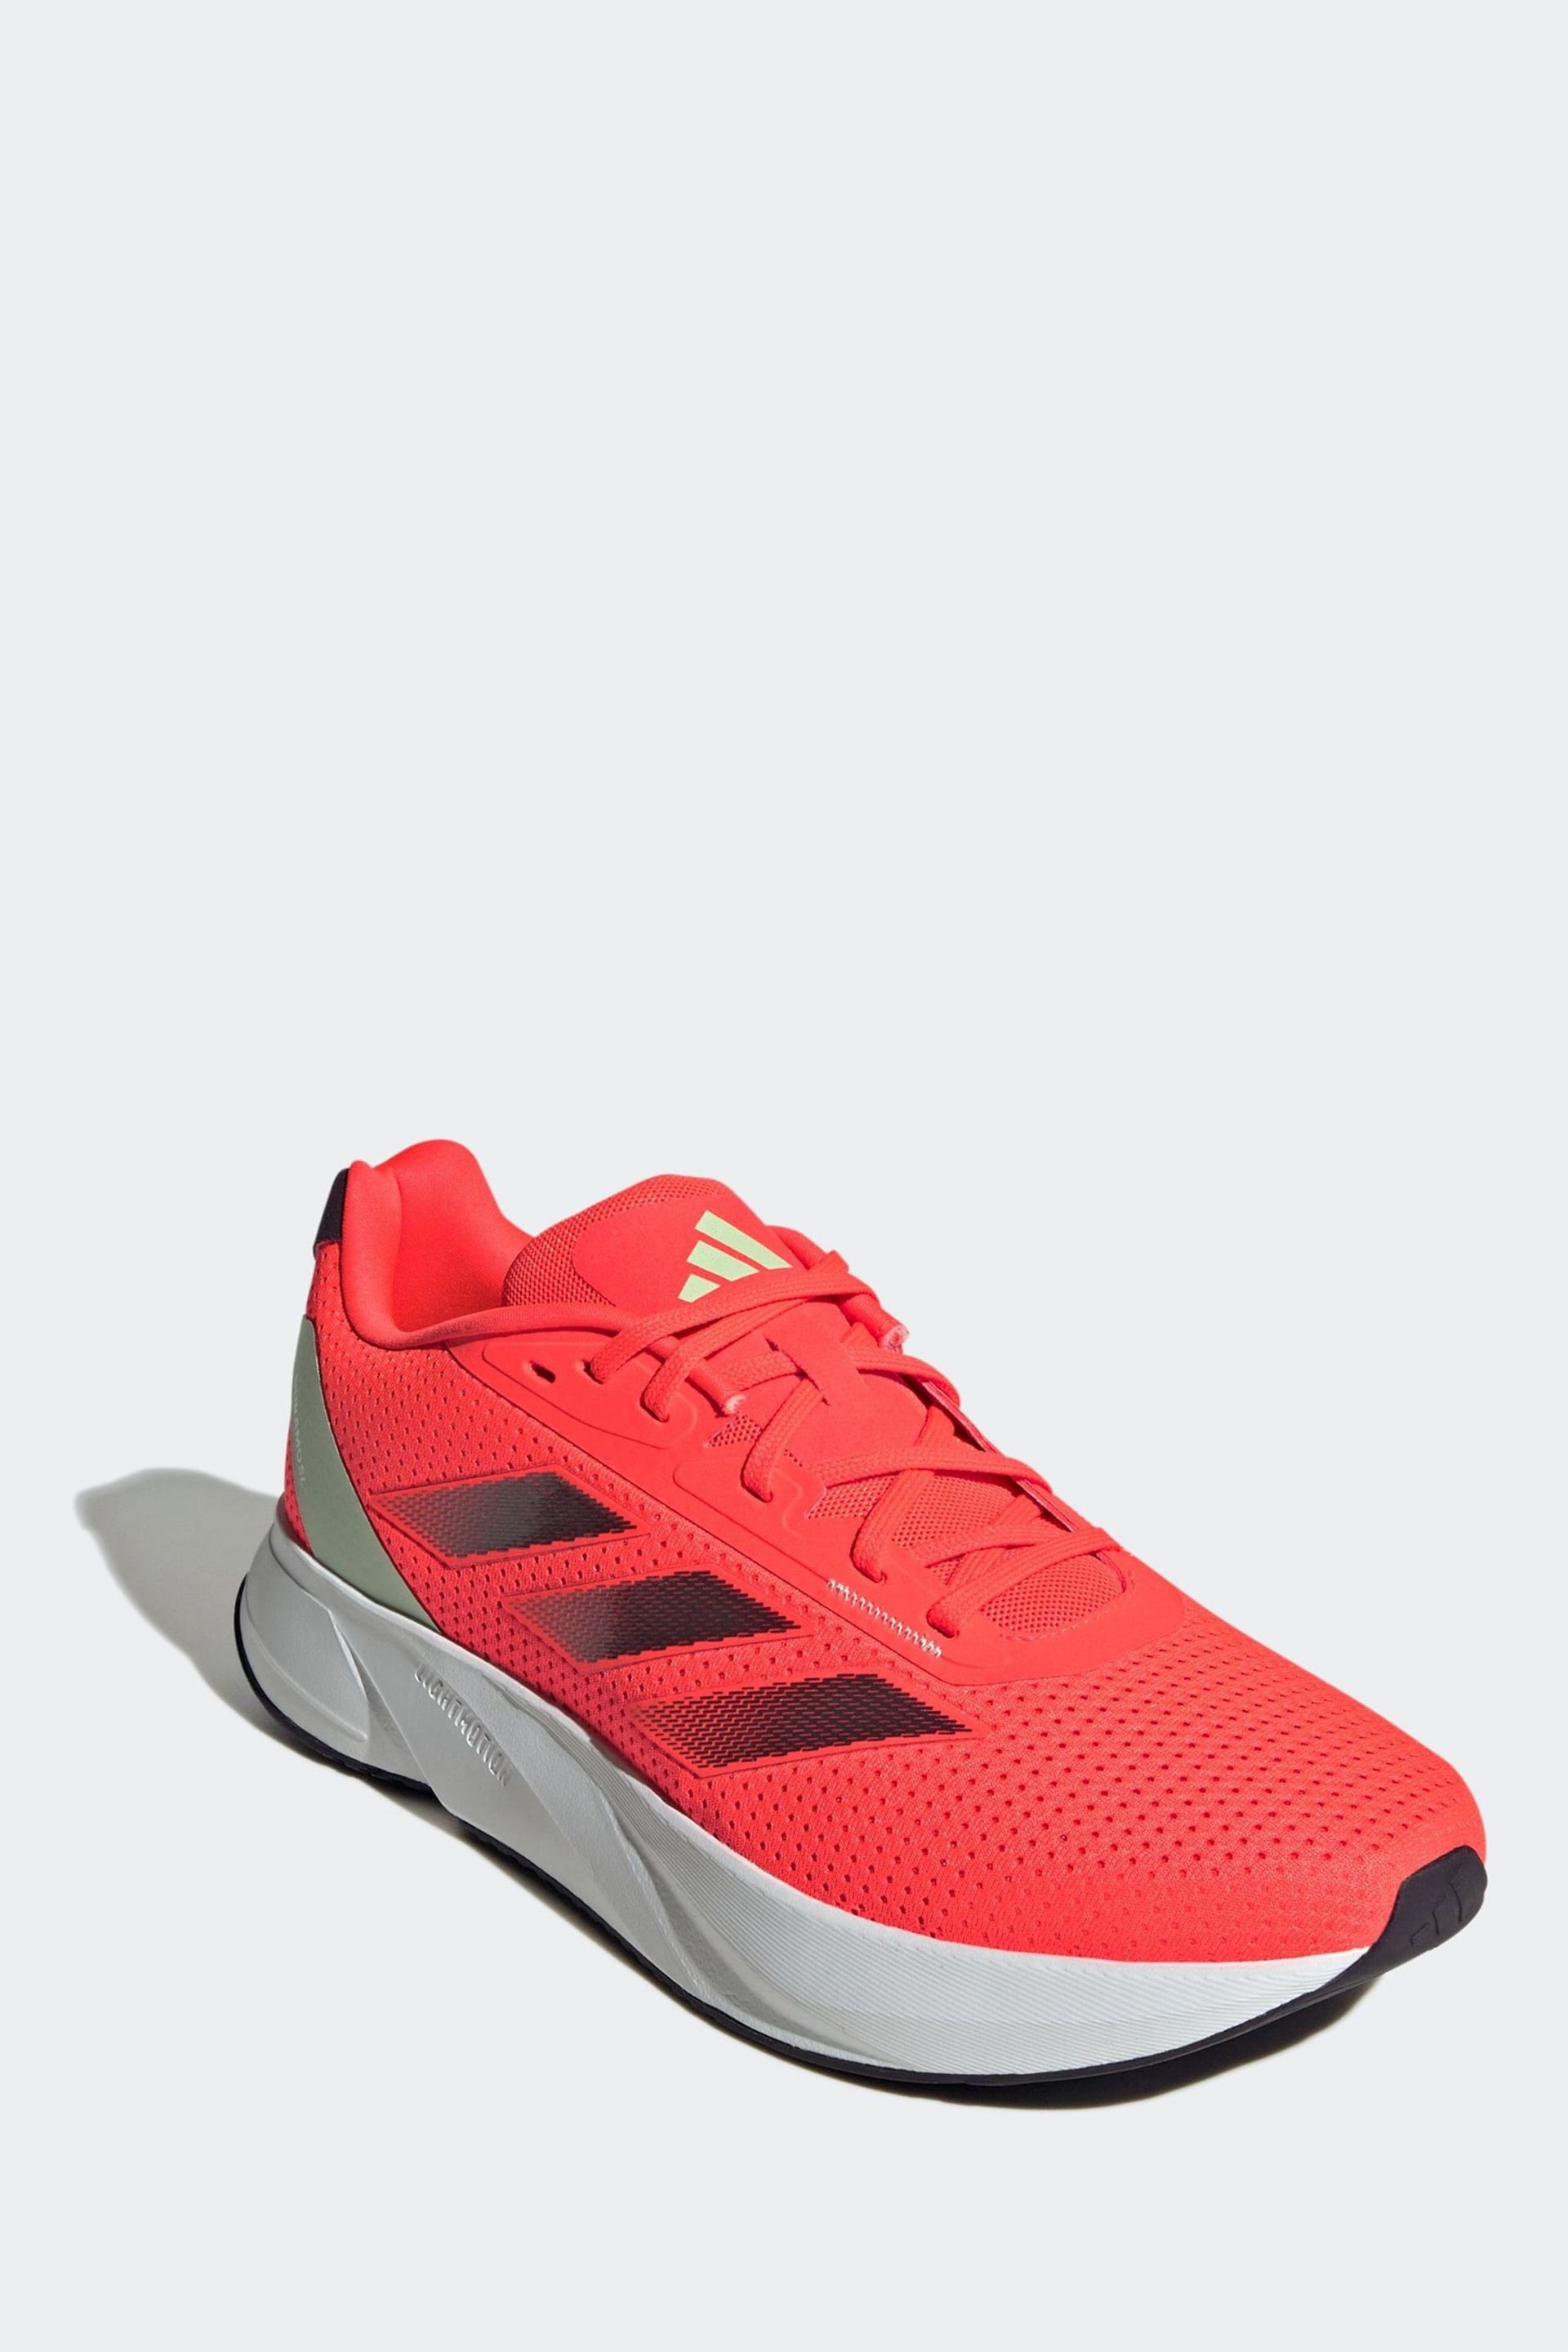 adidas Red Duramo SL Trainers - Image 2 of 8